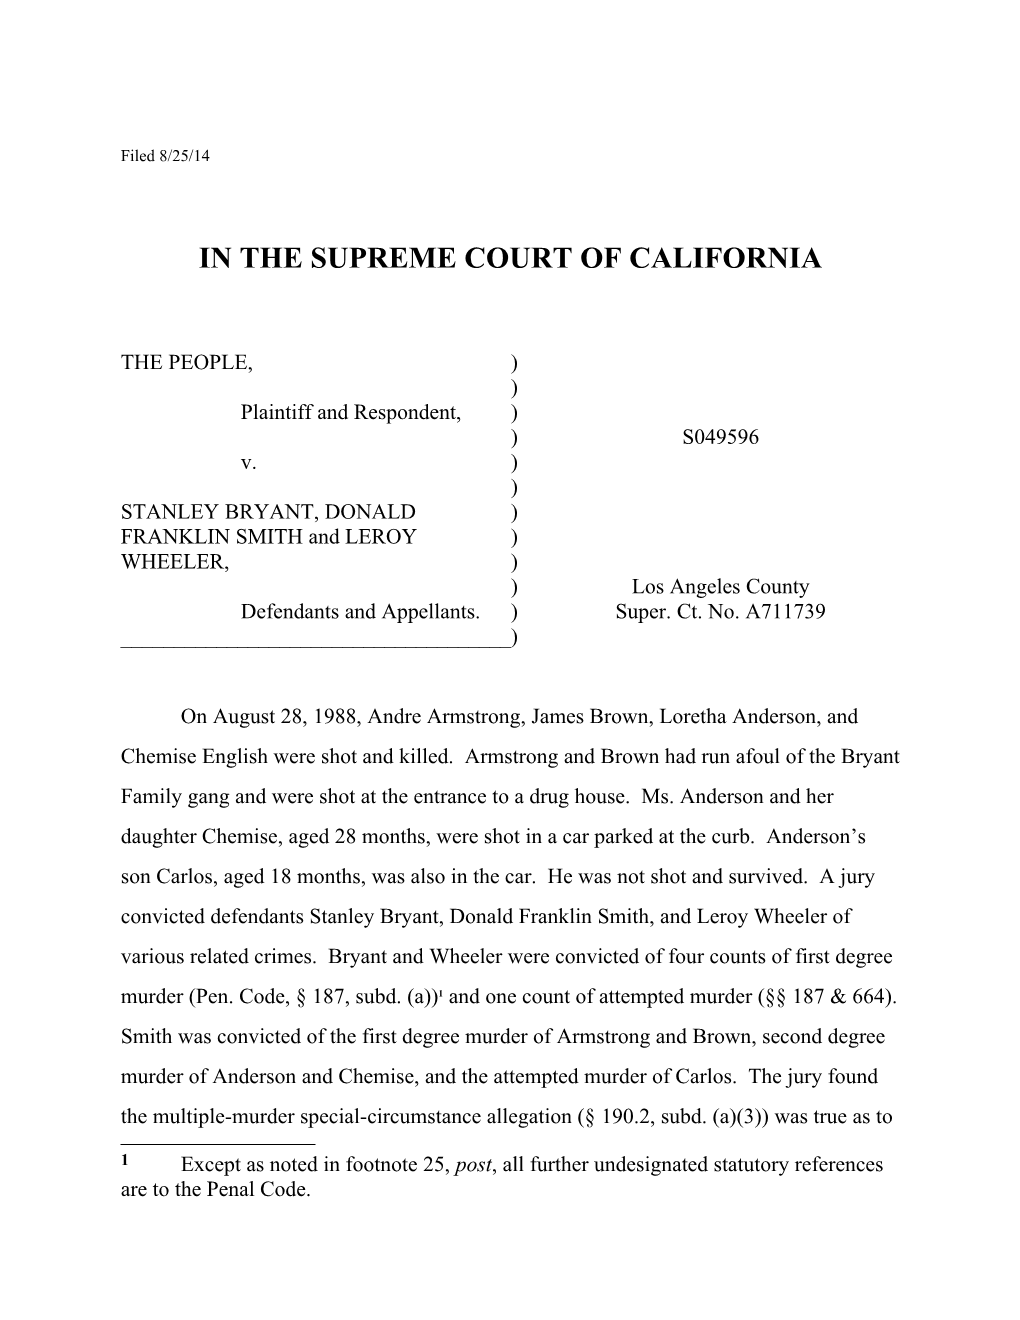 In the Supreme Court of California s3